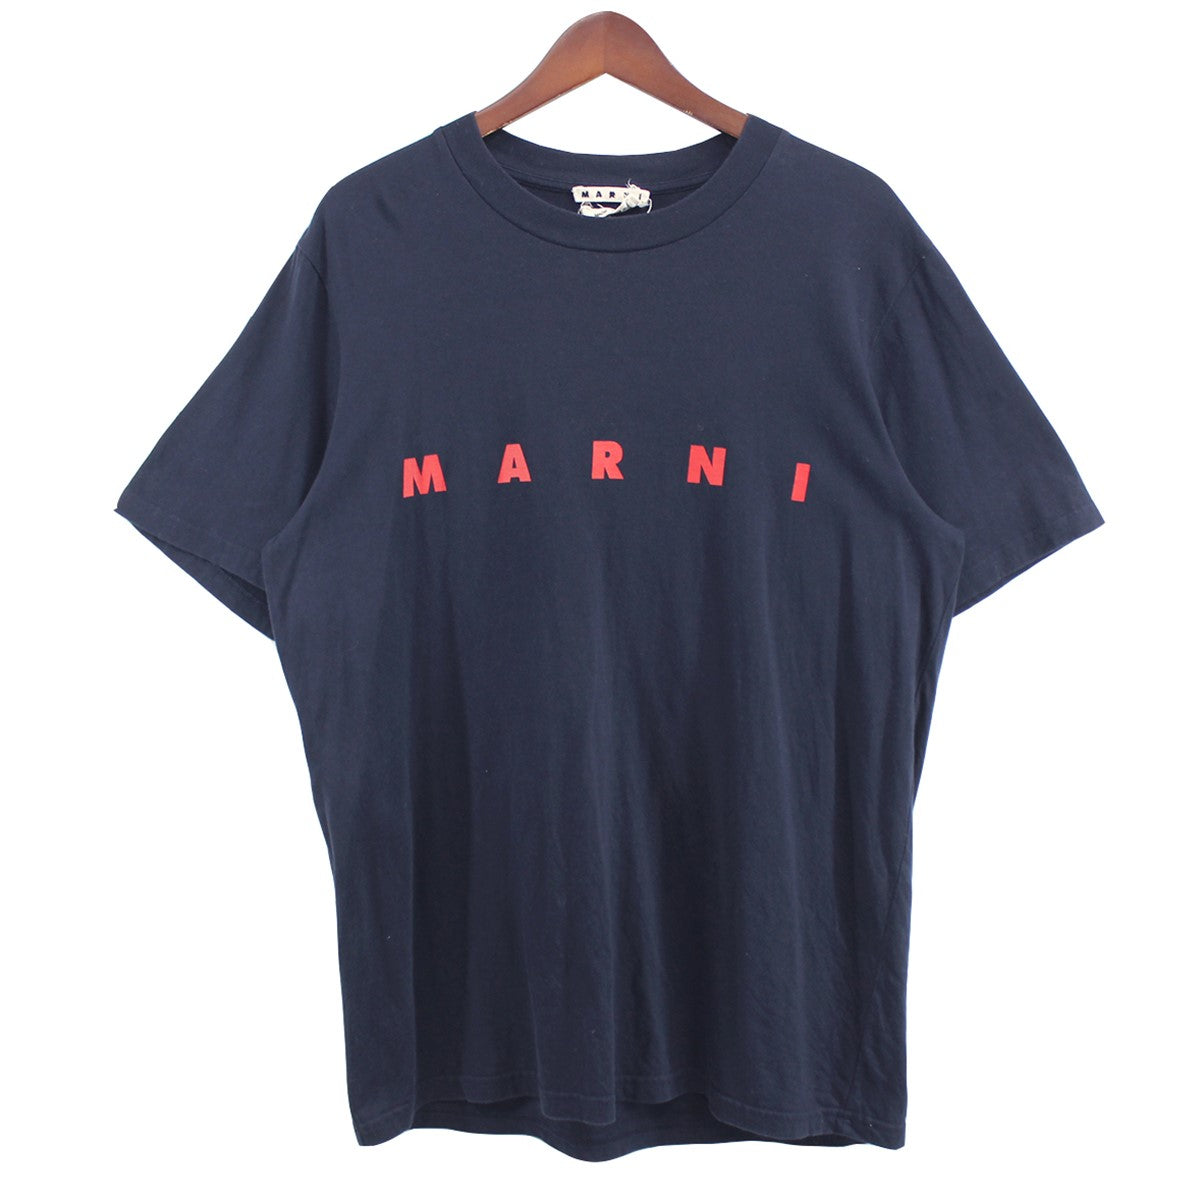 MARNI(マルニ) 20AW Marni Logo Print T-Shirt ロゴ プリント Tシャツ